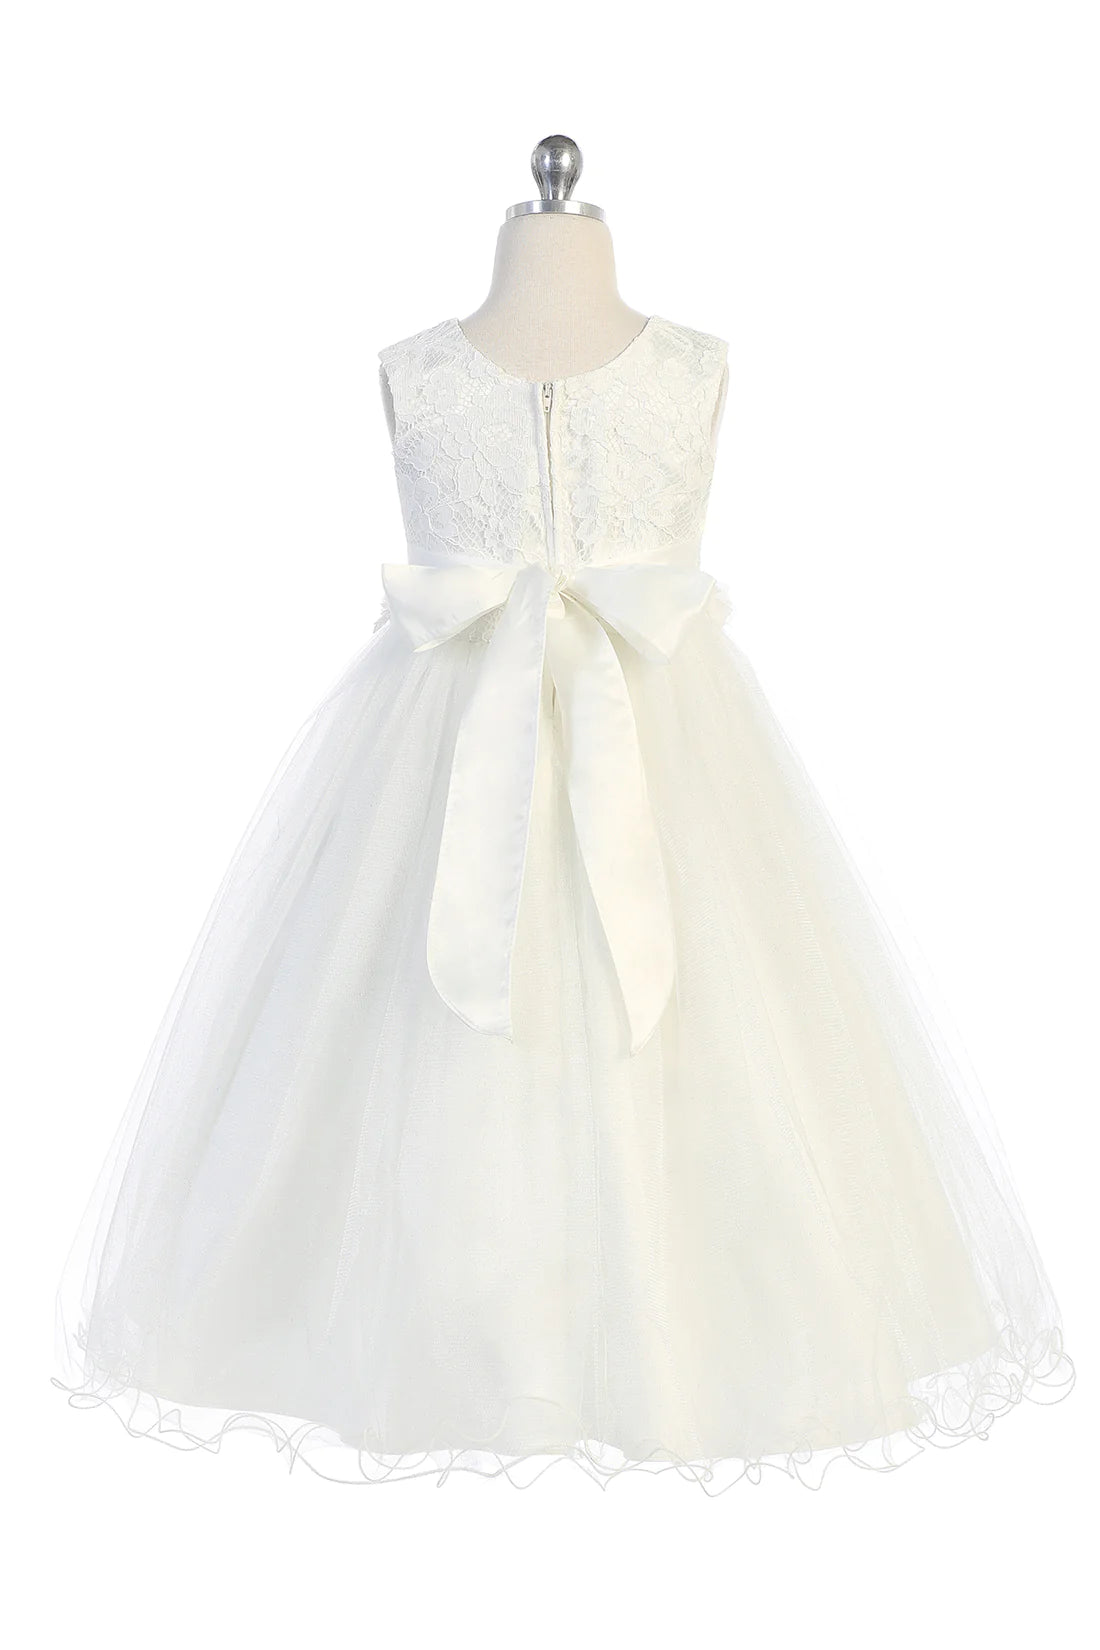 KD468-Lace Glitter Tulle Dress